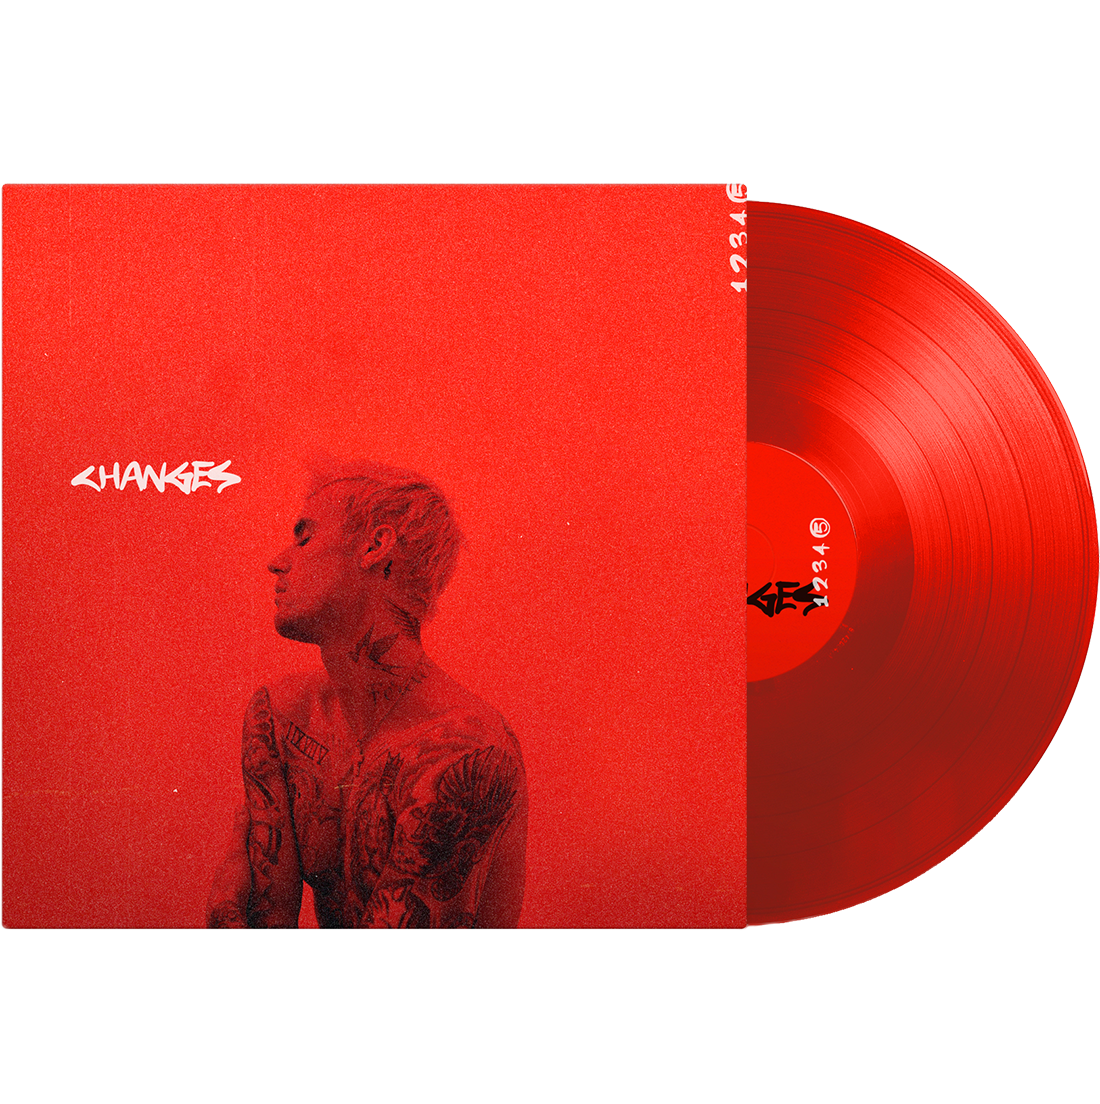 justin bieber - Changes: Red Vinyl LP